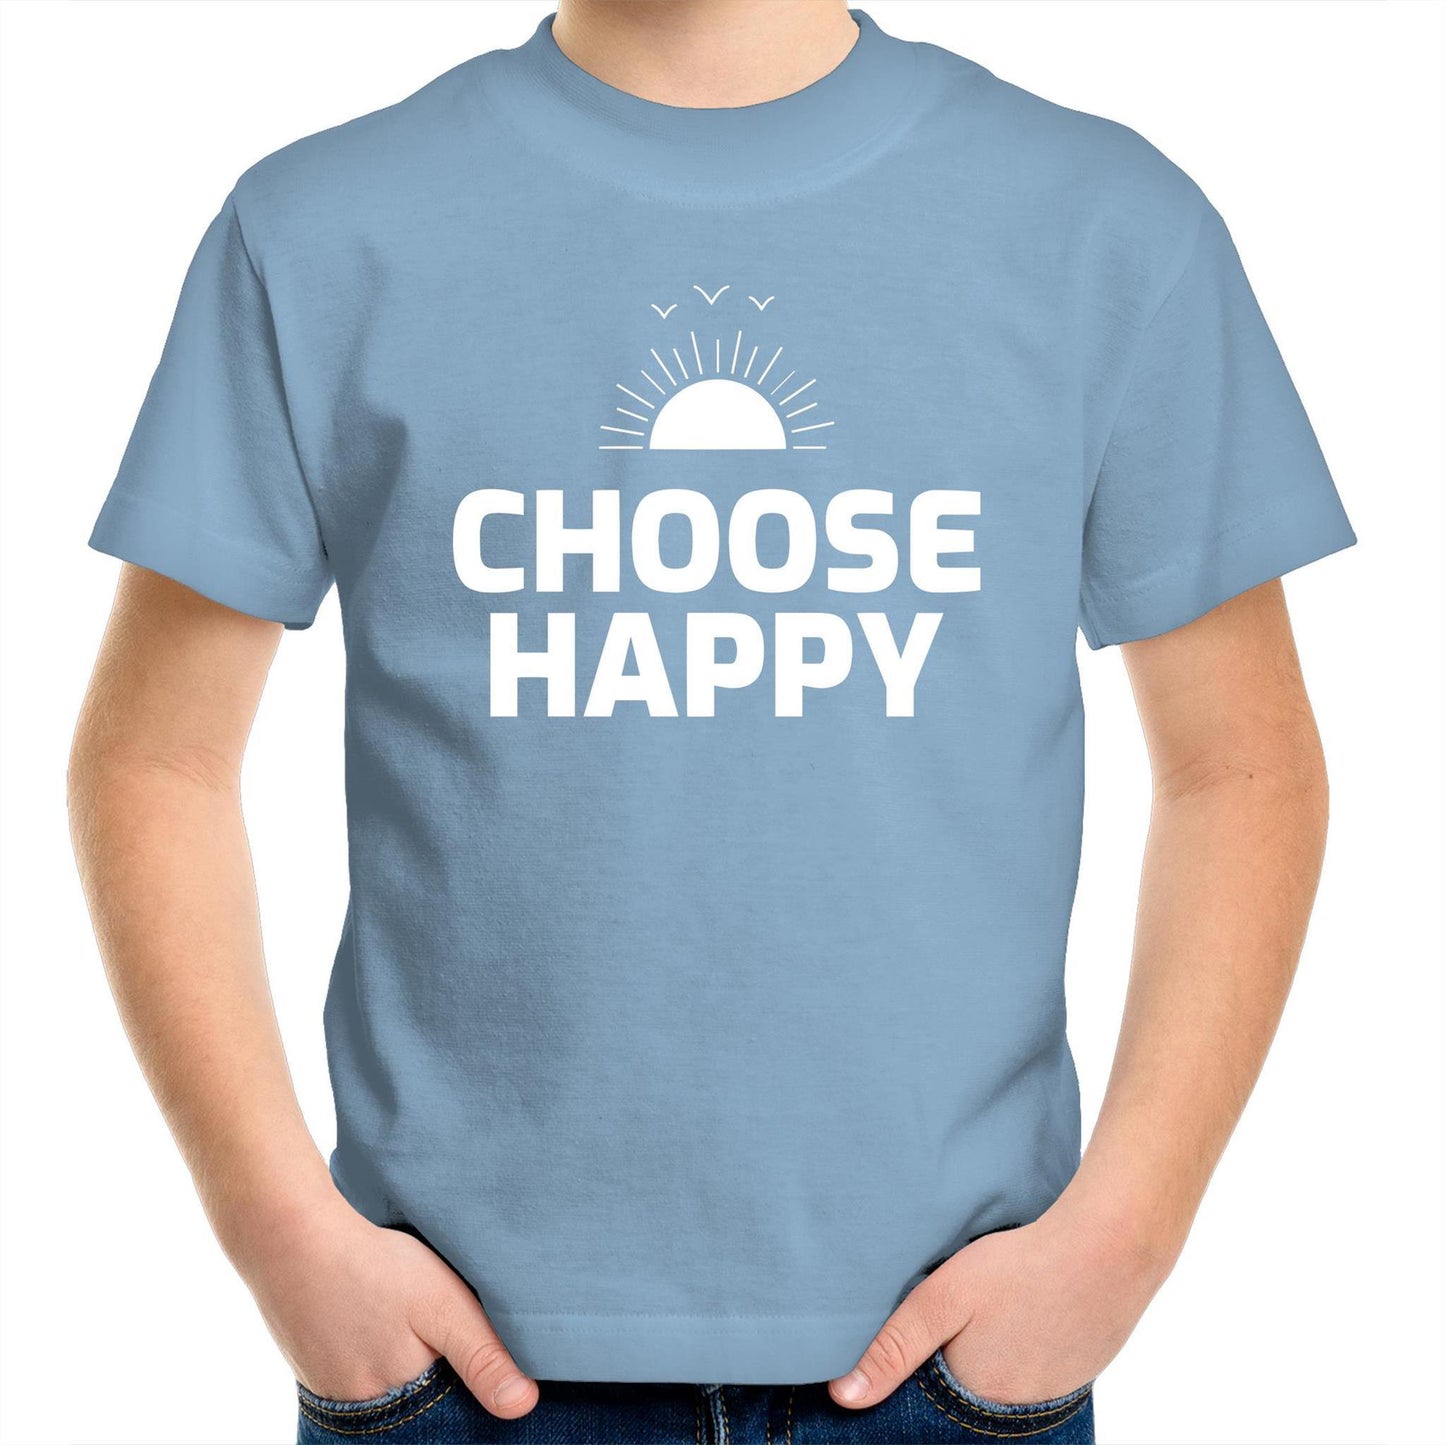 Choose Happy - Kids Youth Crew T-Shirt Carolina Blue Kids Youth T-shirt